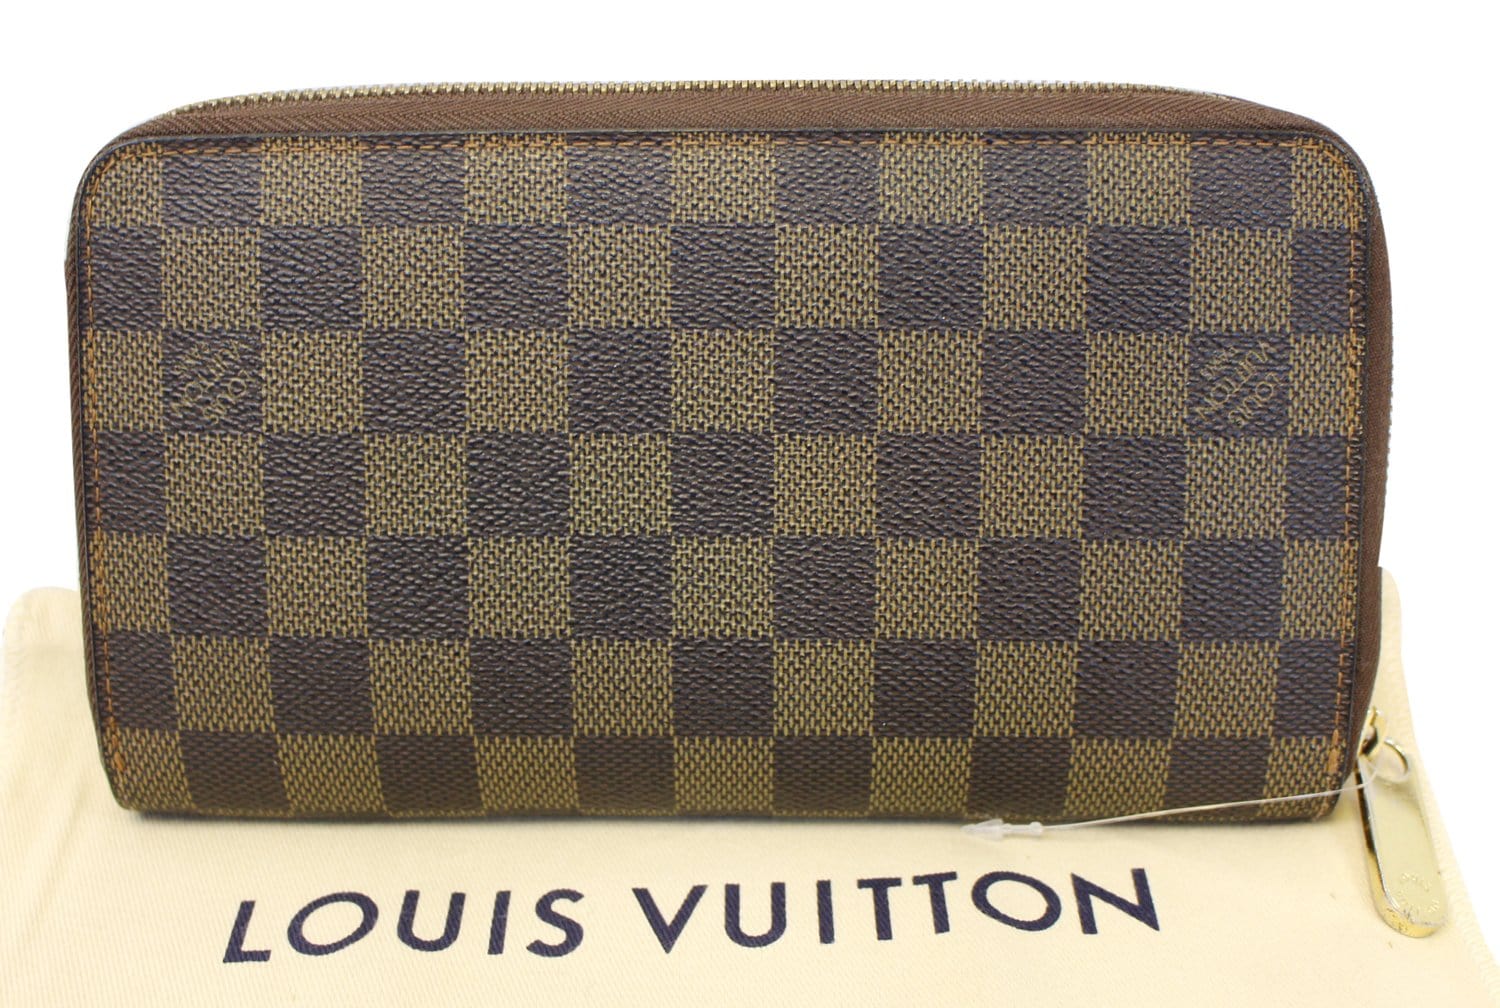 Louis Vuitton 2006 Damier Ebene Pattern Wallet